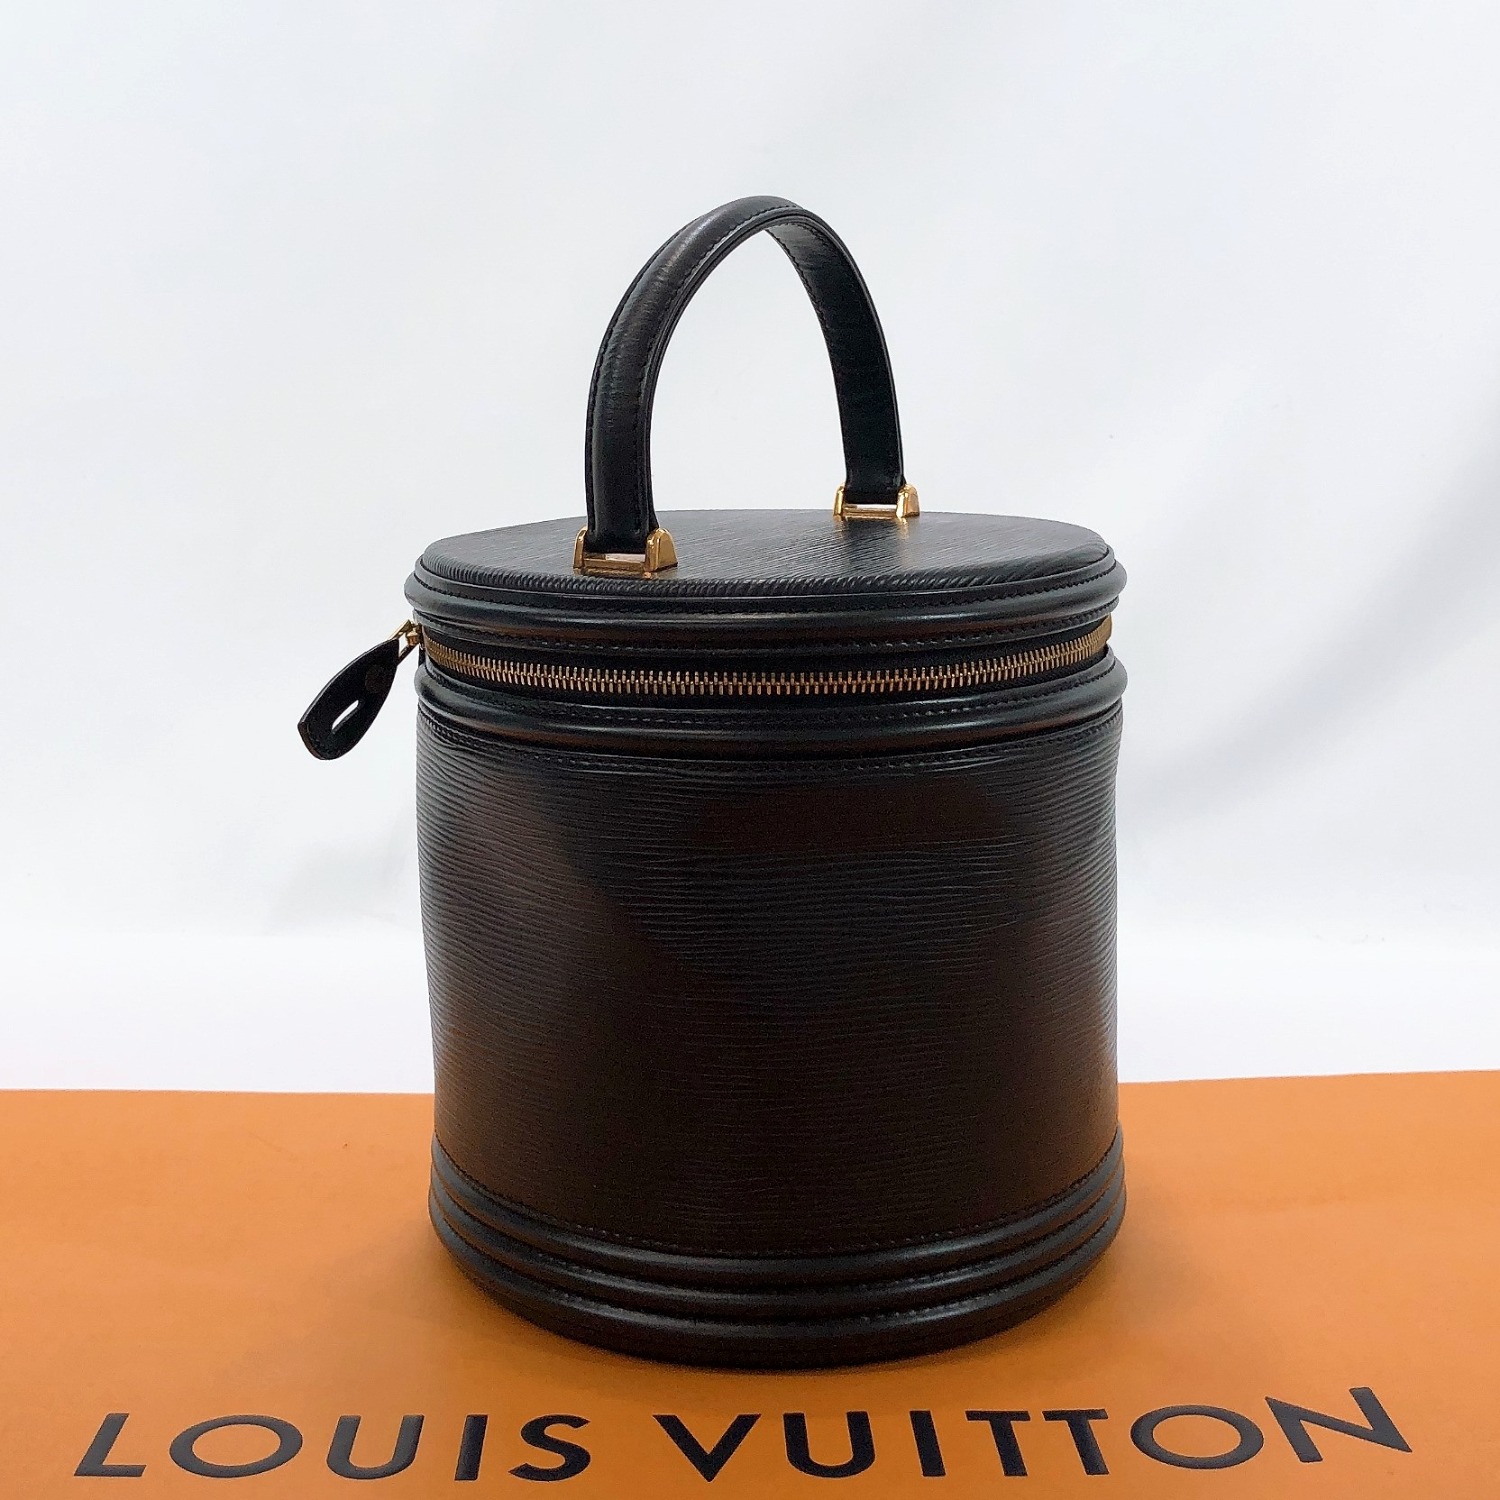 LOUIS VUITTON Handbag M48032 Cannes Vanity bag Epi Leather Women | eBay